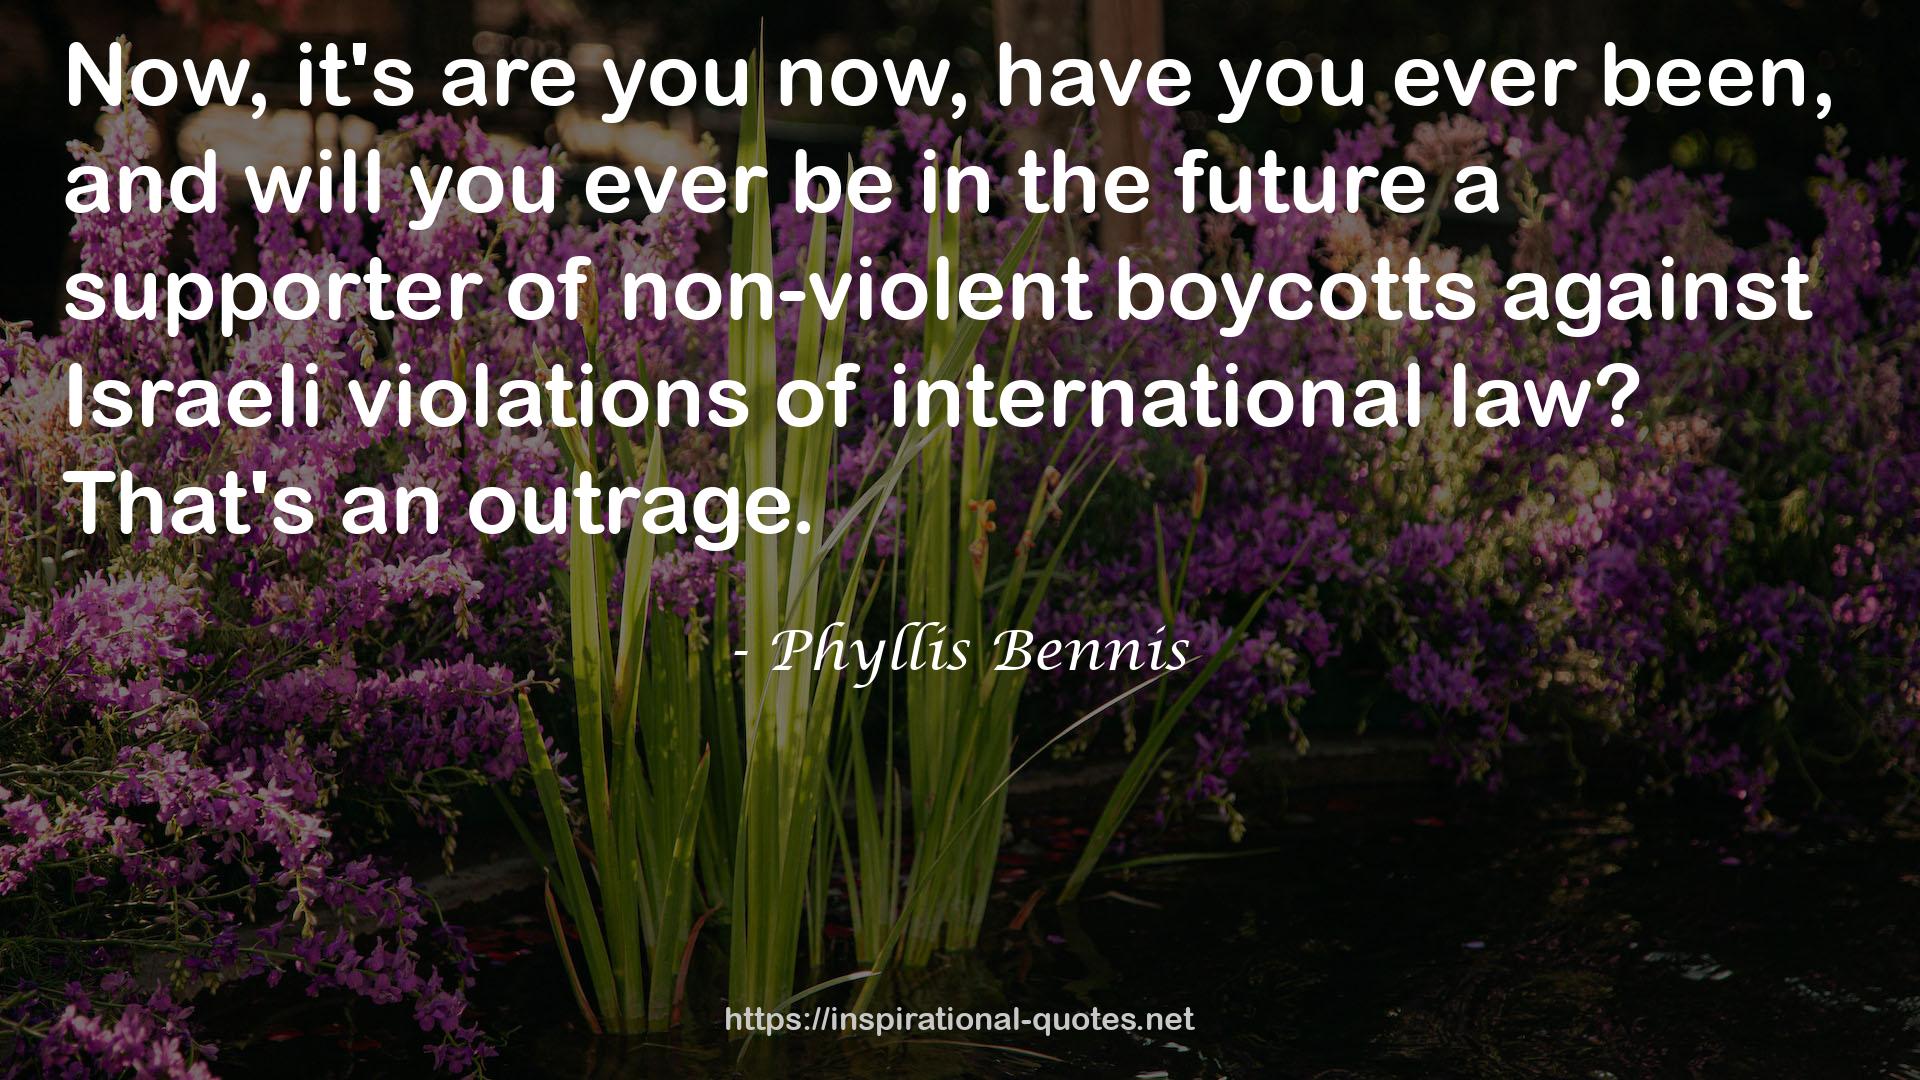 Phyllis Bennis QUOTES